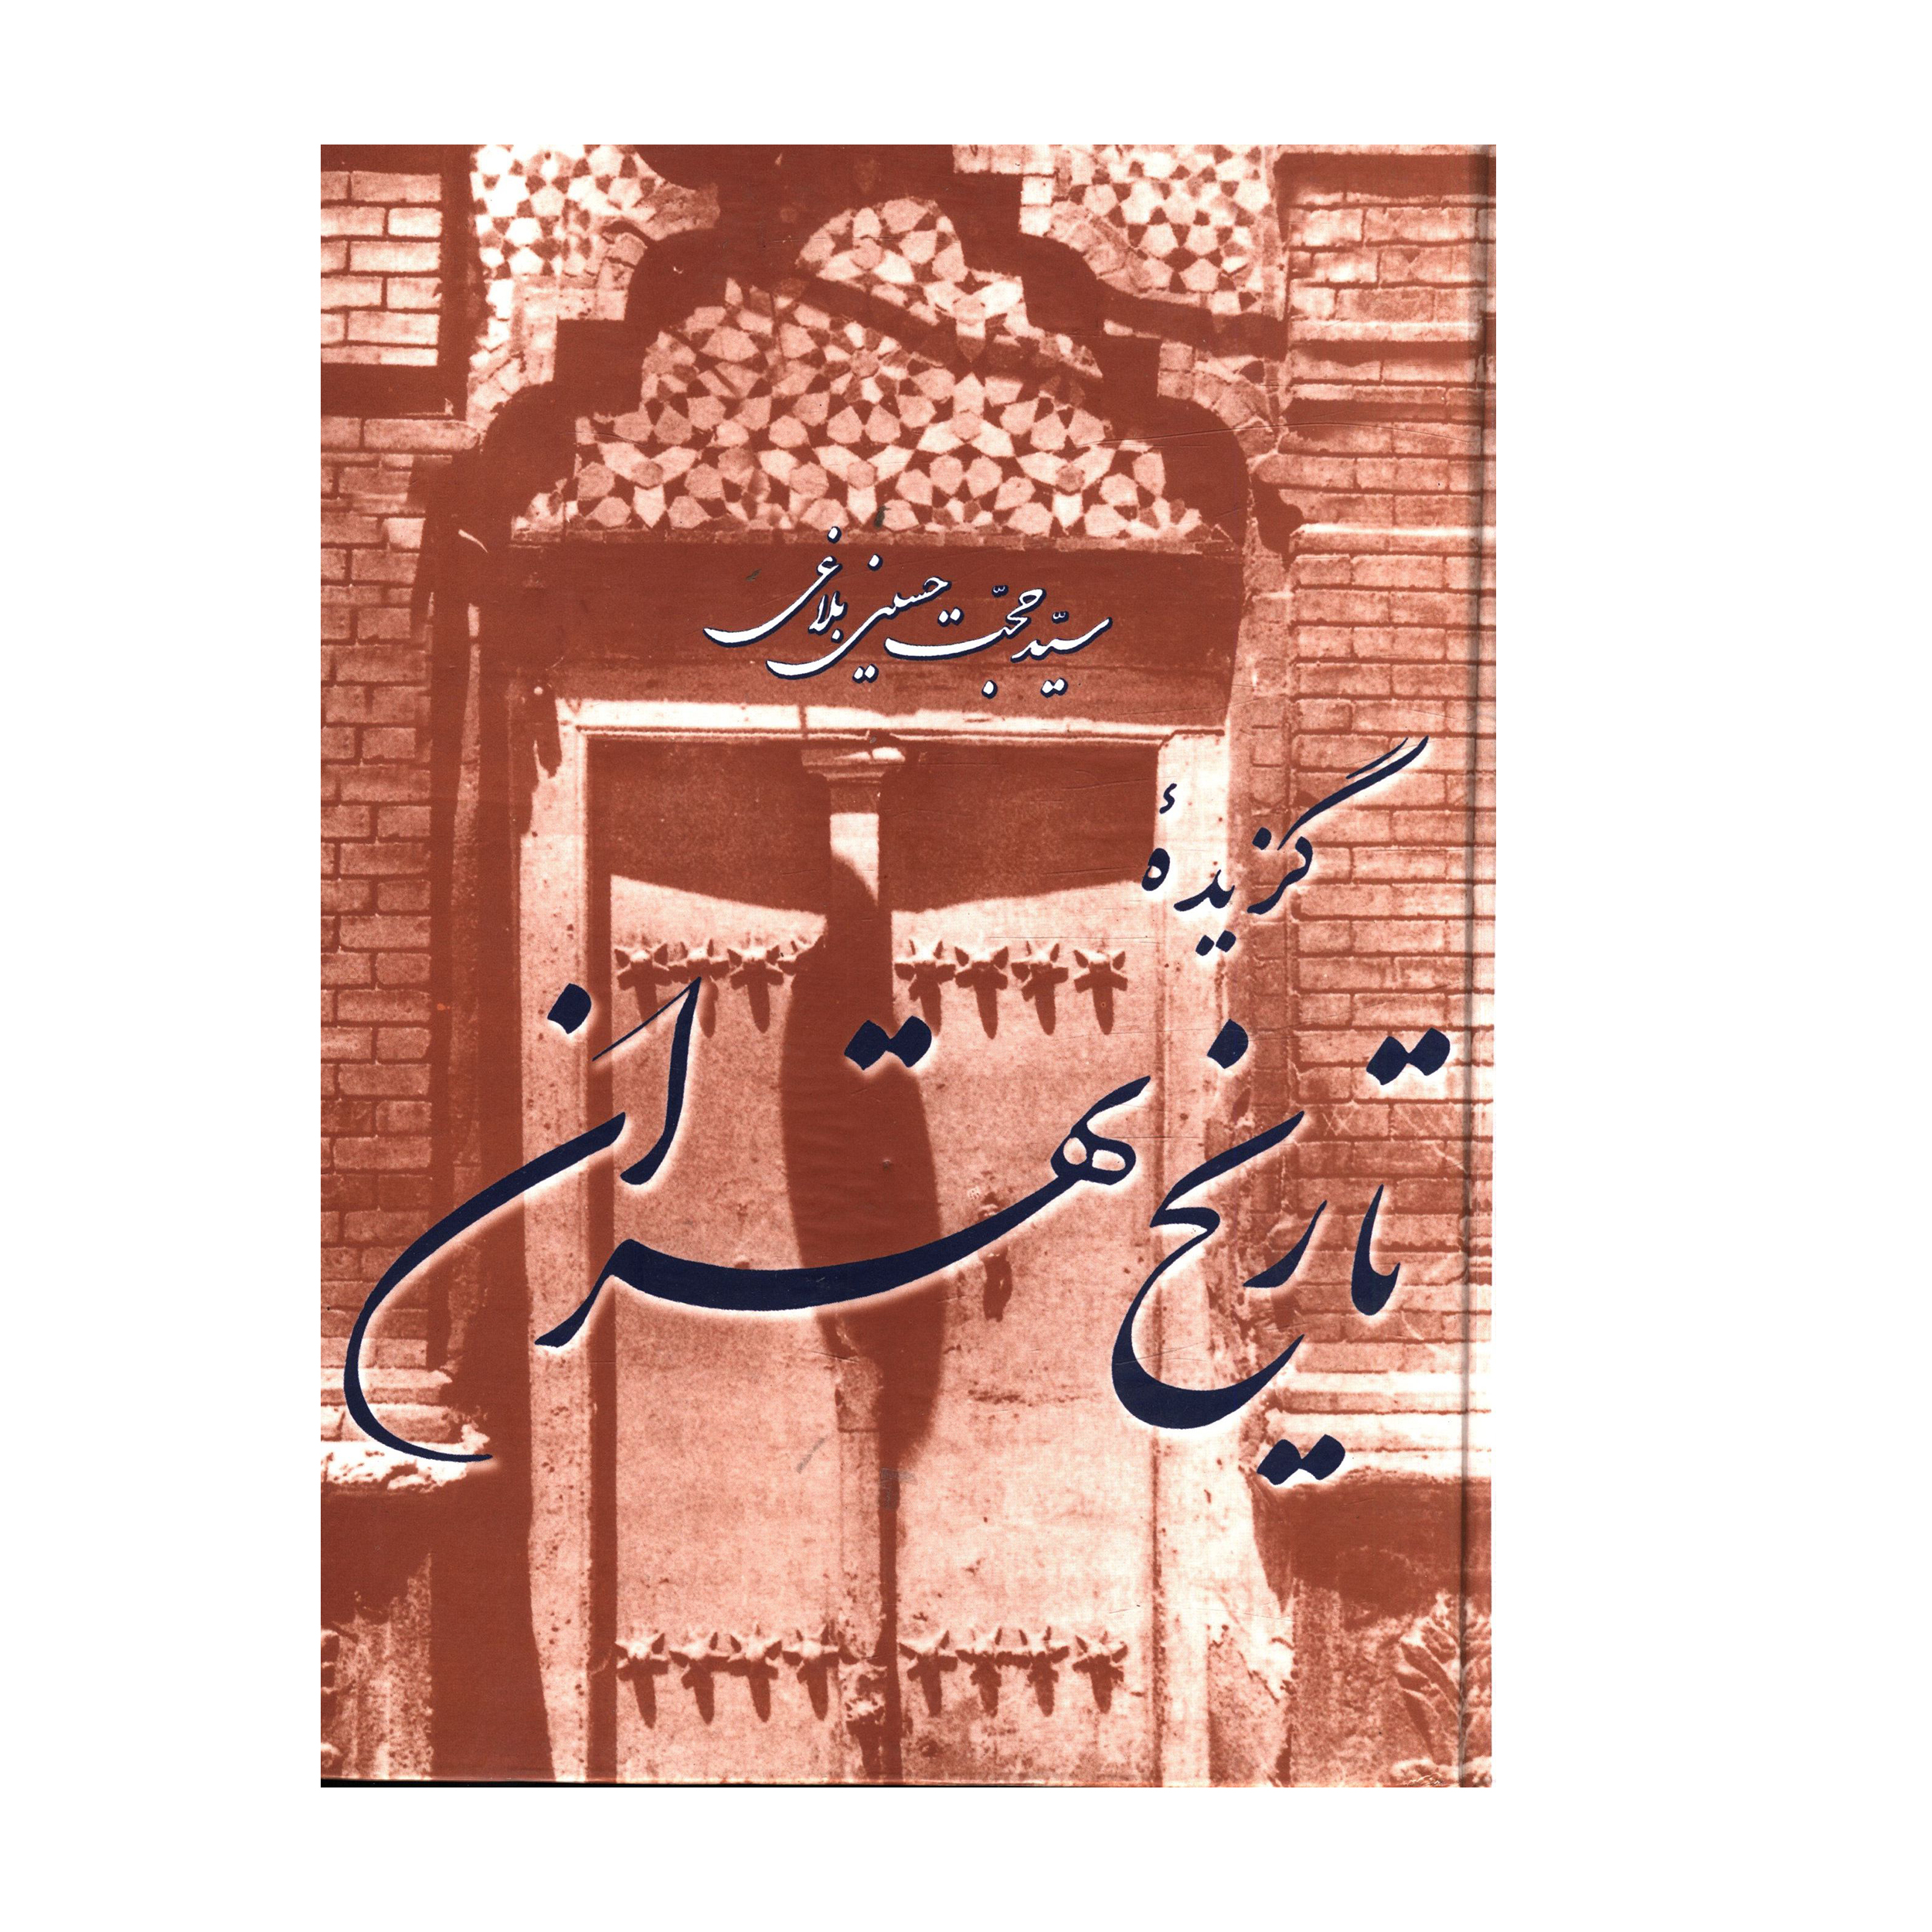 کتاب گزيده تاريخ تهران اثر حجت حسيني بلاغي نشر مازیار 